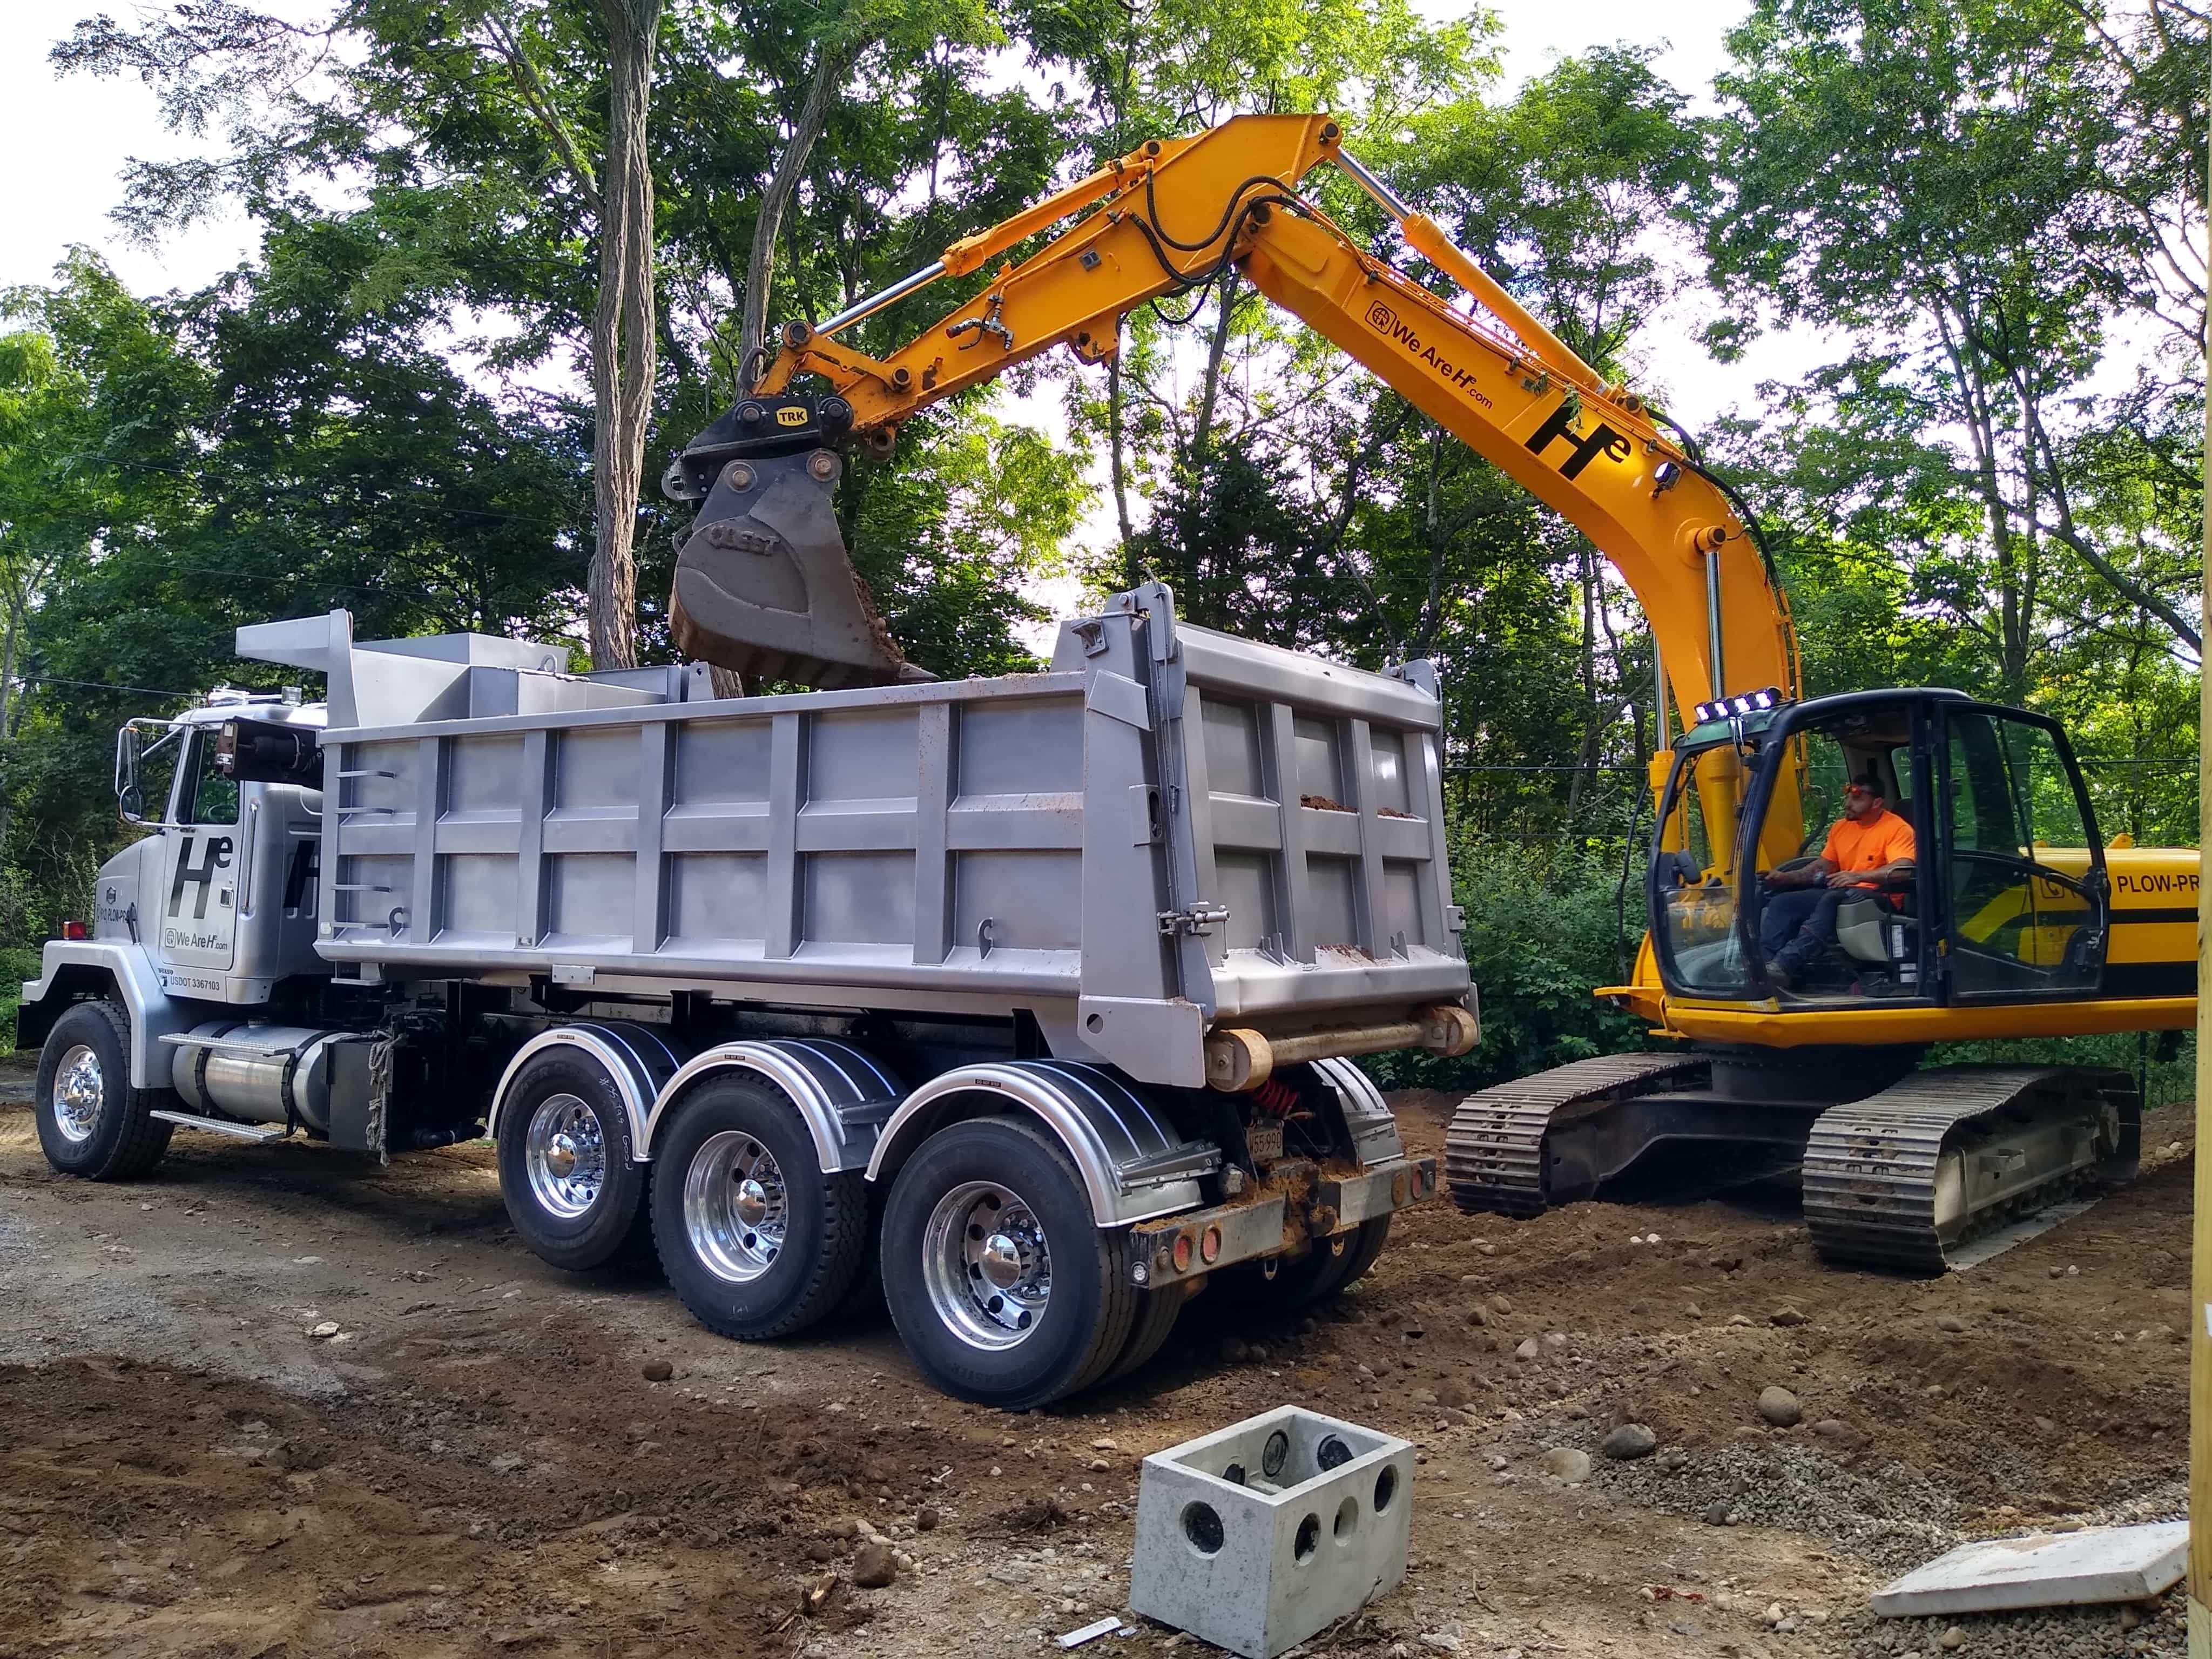 Hunter Environmental Dump truck working with excavator